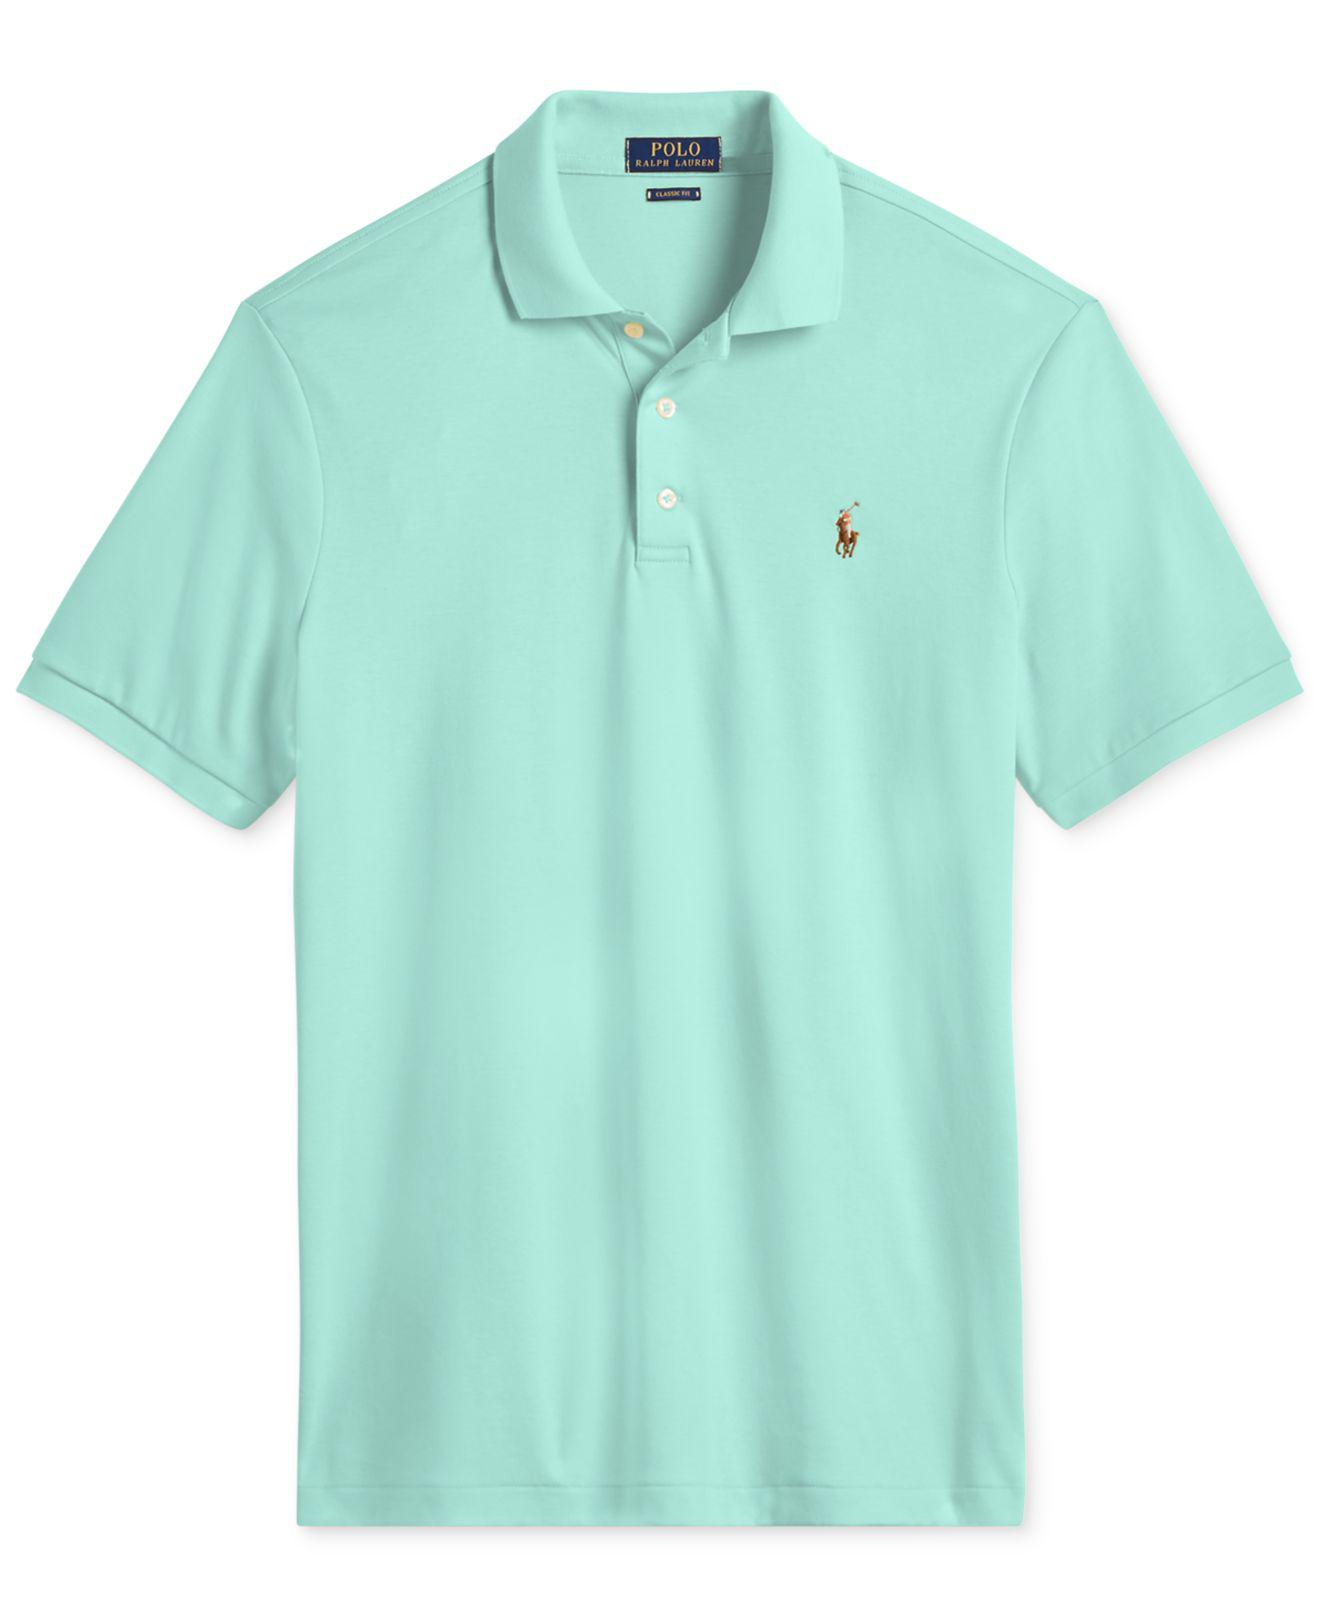 Polo Ralph Lauren BRASIL Green Polo Shirt #5 Size Custom Slim Fit